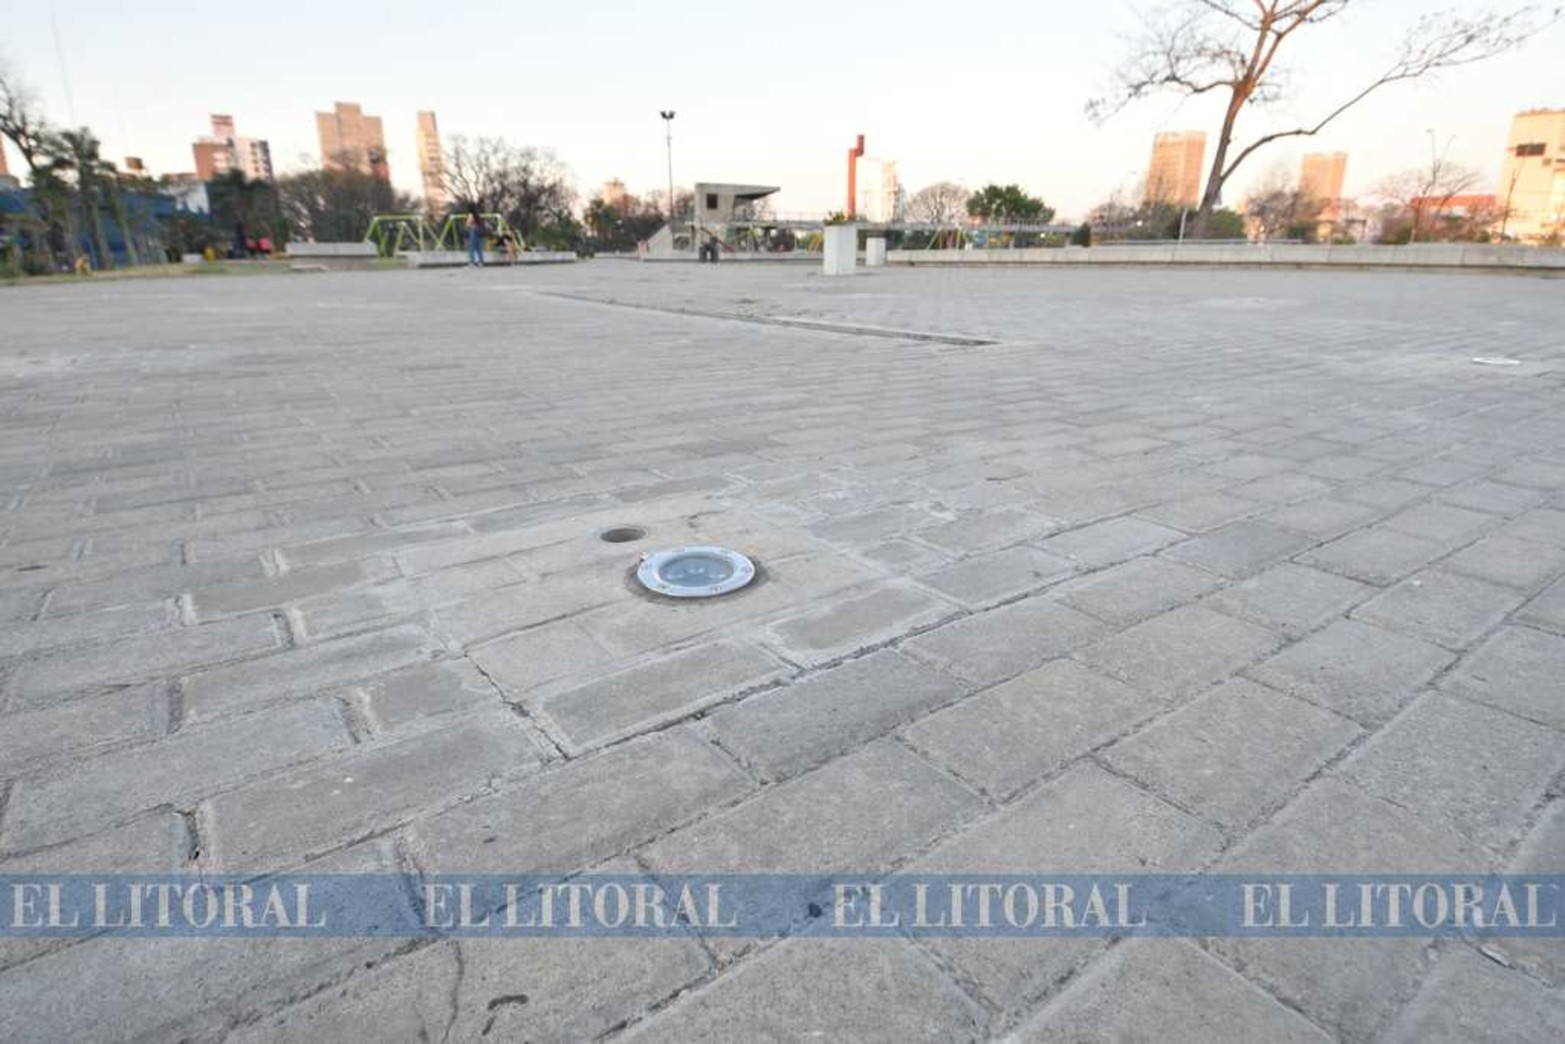 Plaza Alberdi